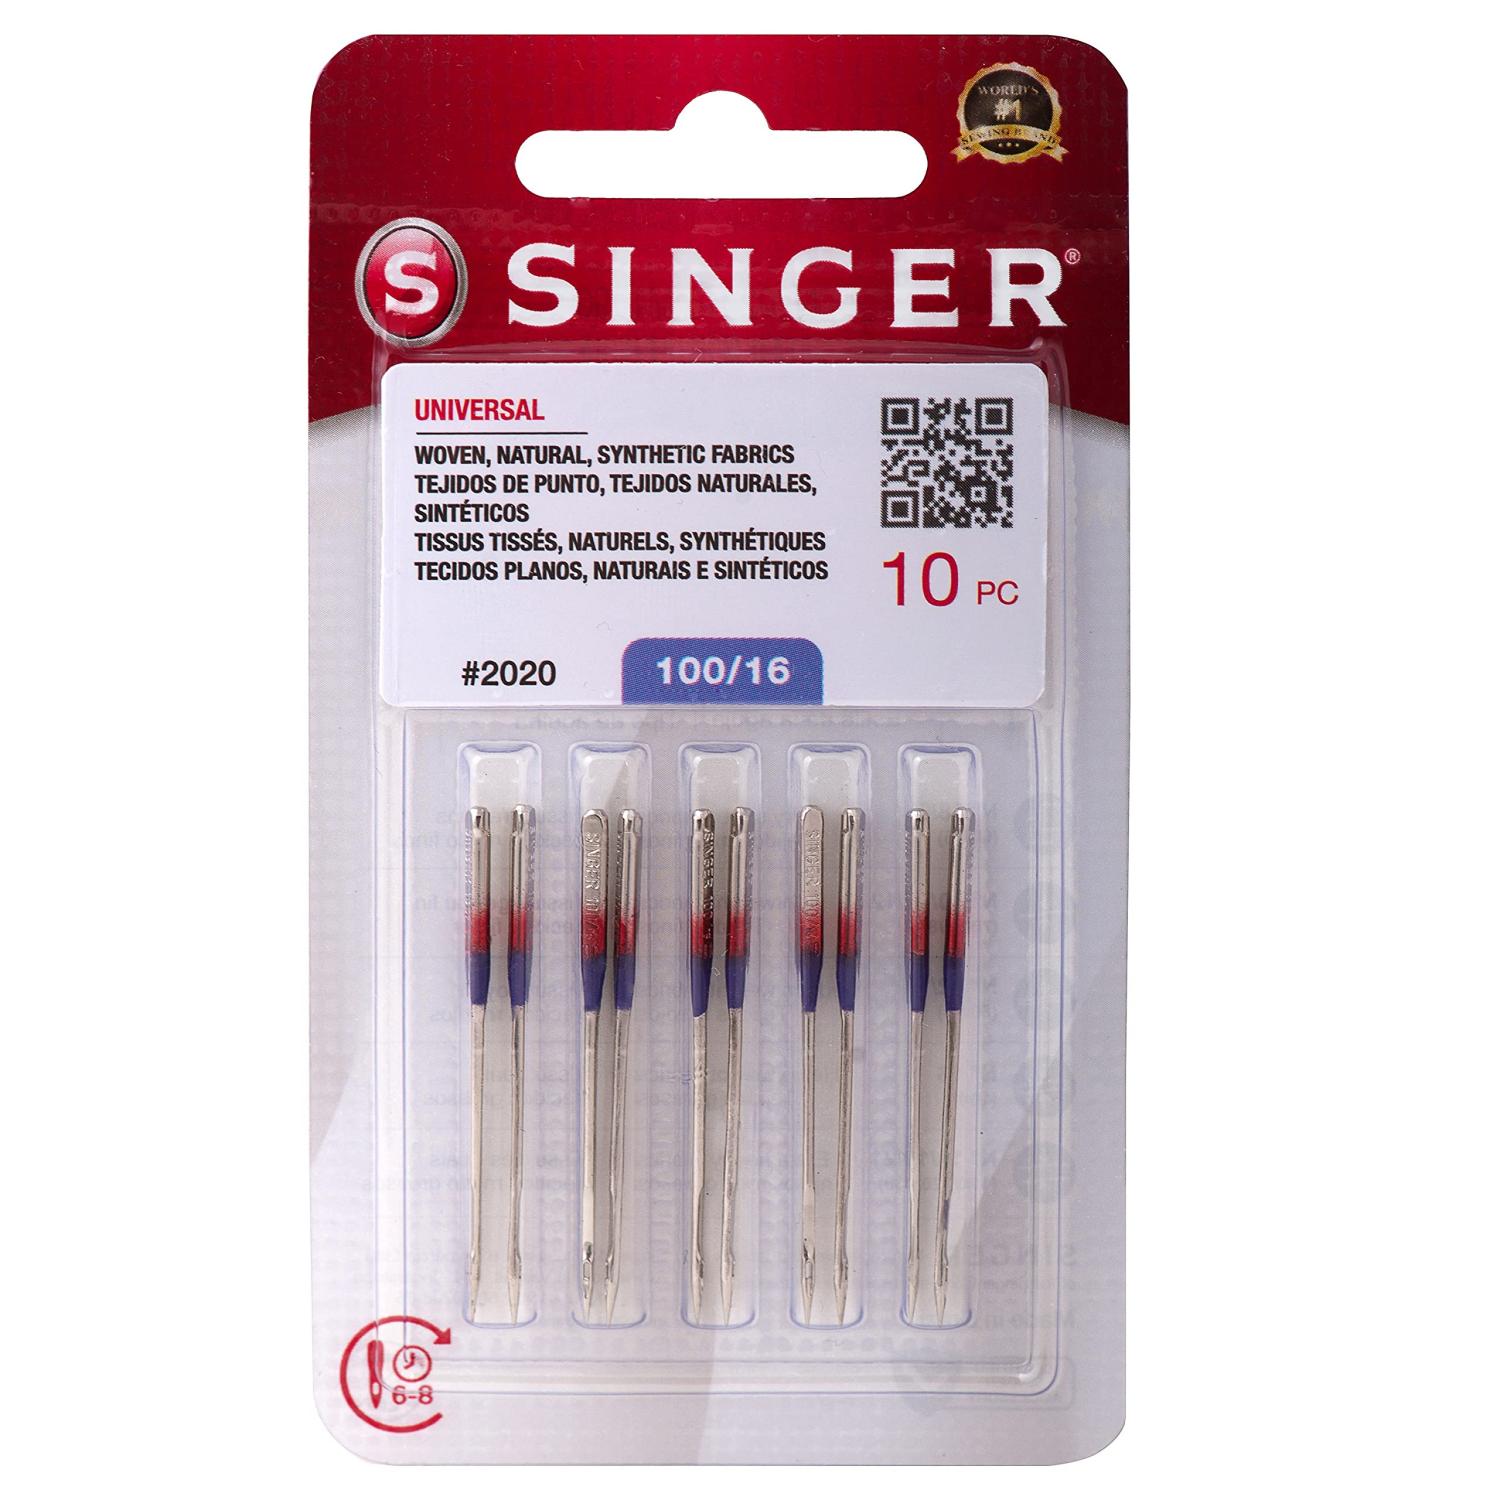 SINGER 10-Pack Universal 2020 Sewing Machine Needles, Size 100/16